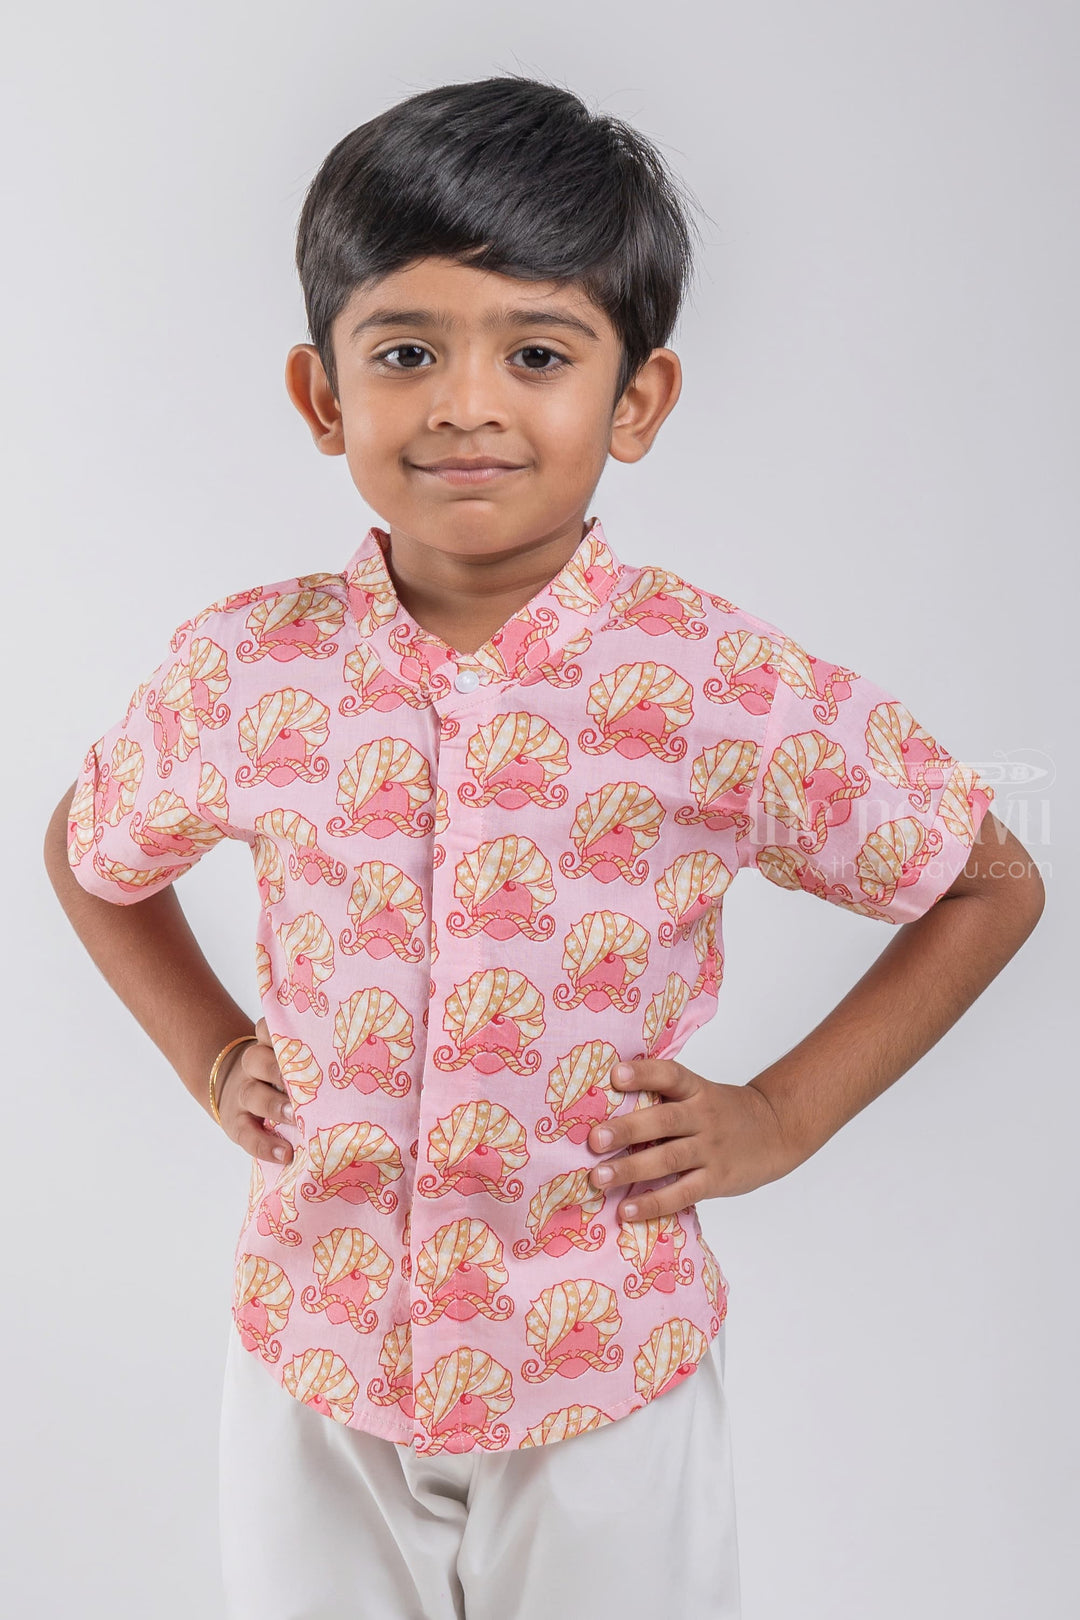 The Nesavu Boys Cotton Shirt Boys Rajasthani Printed Pink Cotton Shirt by The Nesavu psr silks Nesavu 14 (6M) / Pink / Cotton BS045B